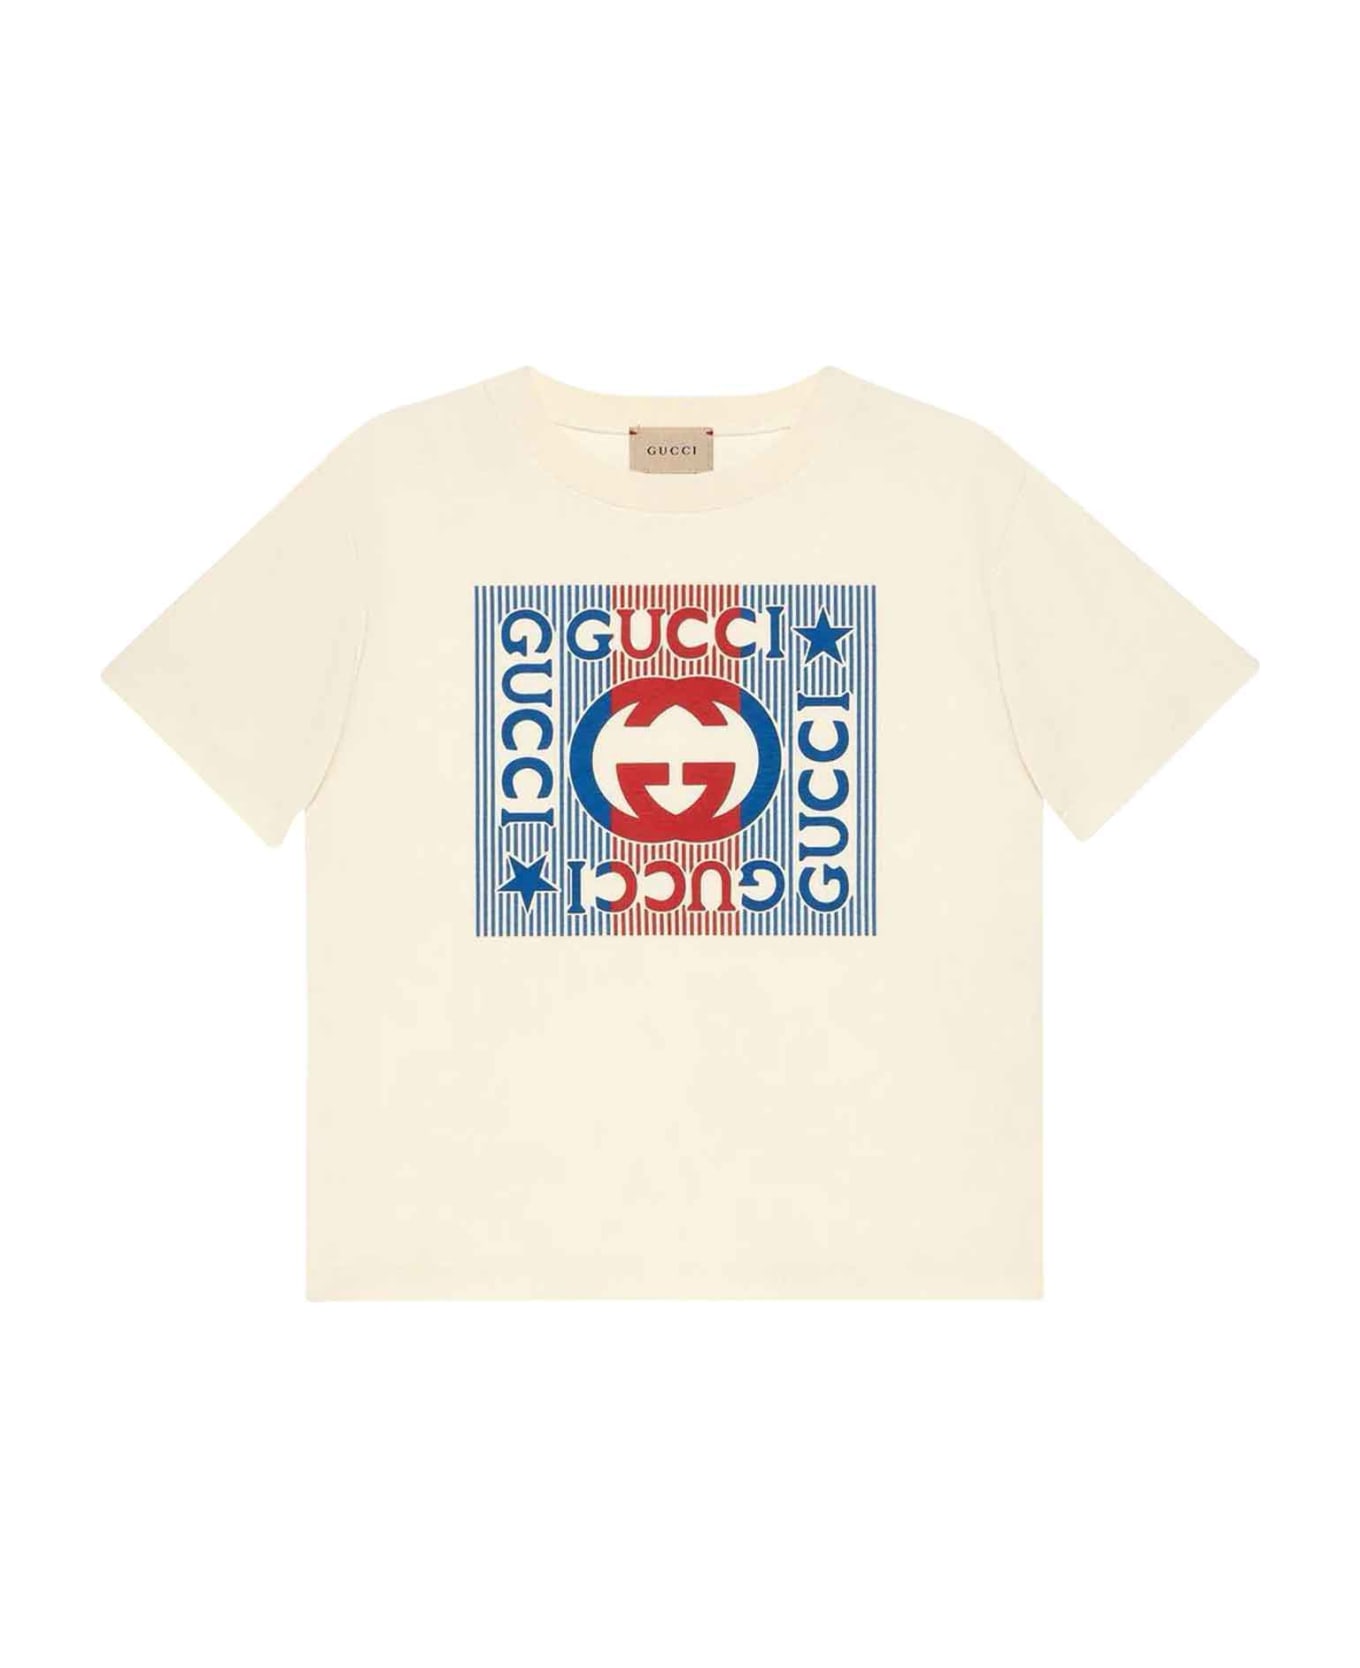 Gucci Unisex White T-shirt - Bianco